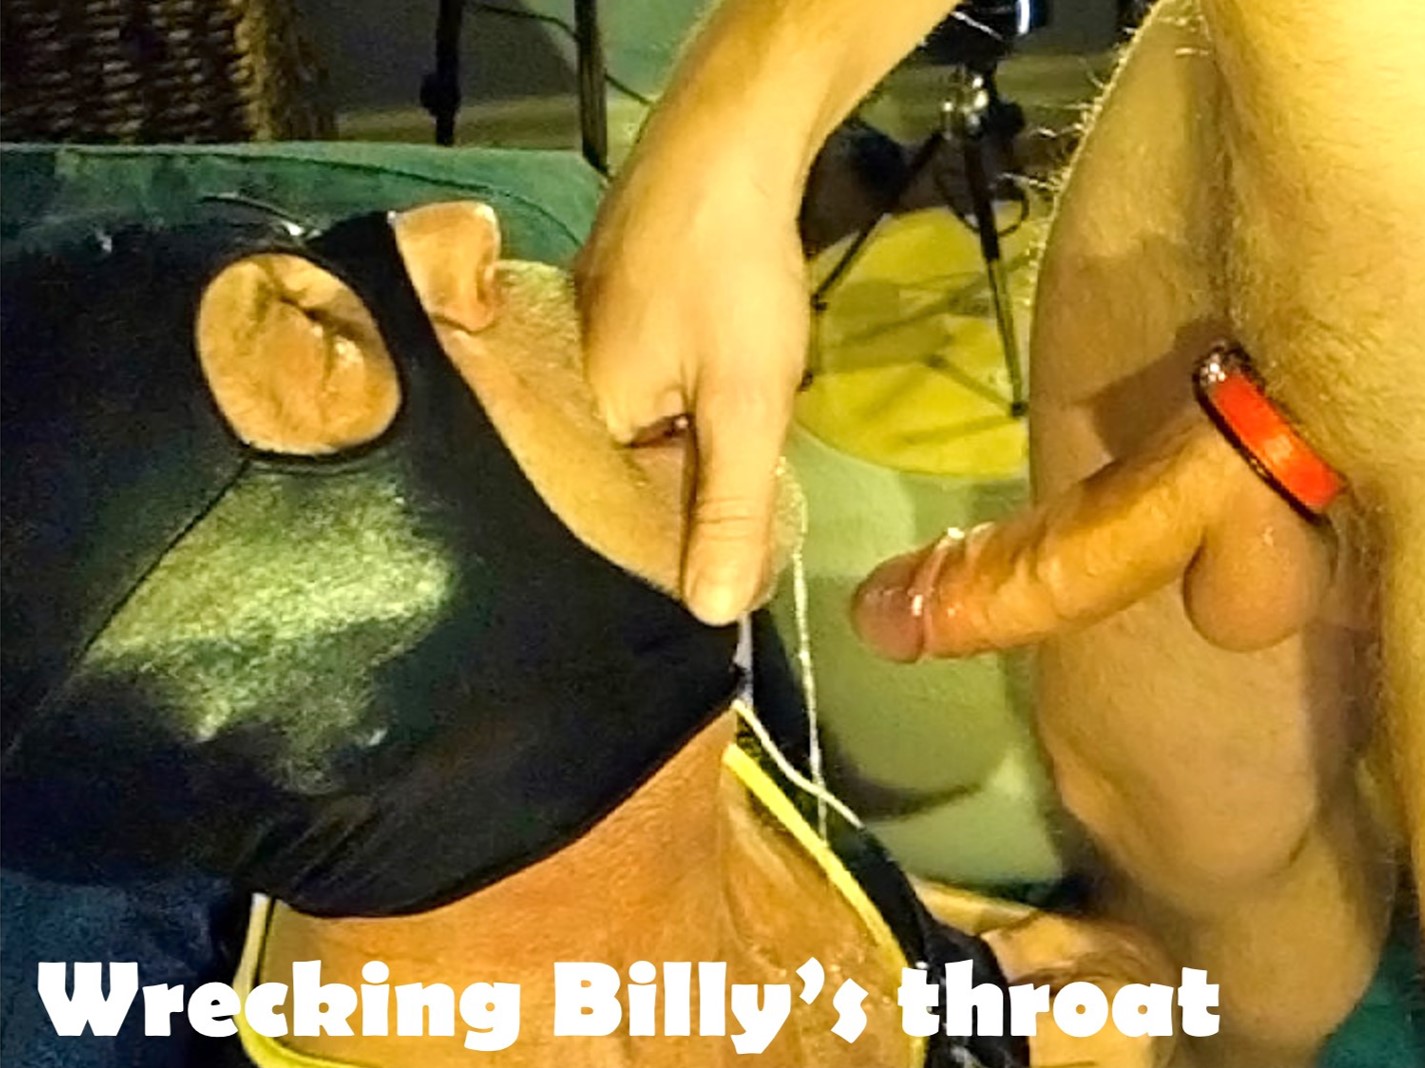 64. Wrecking Billy's throat